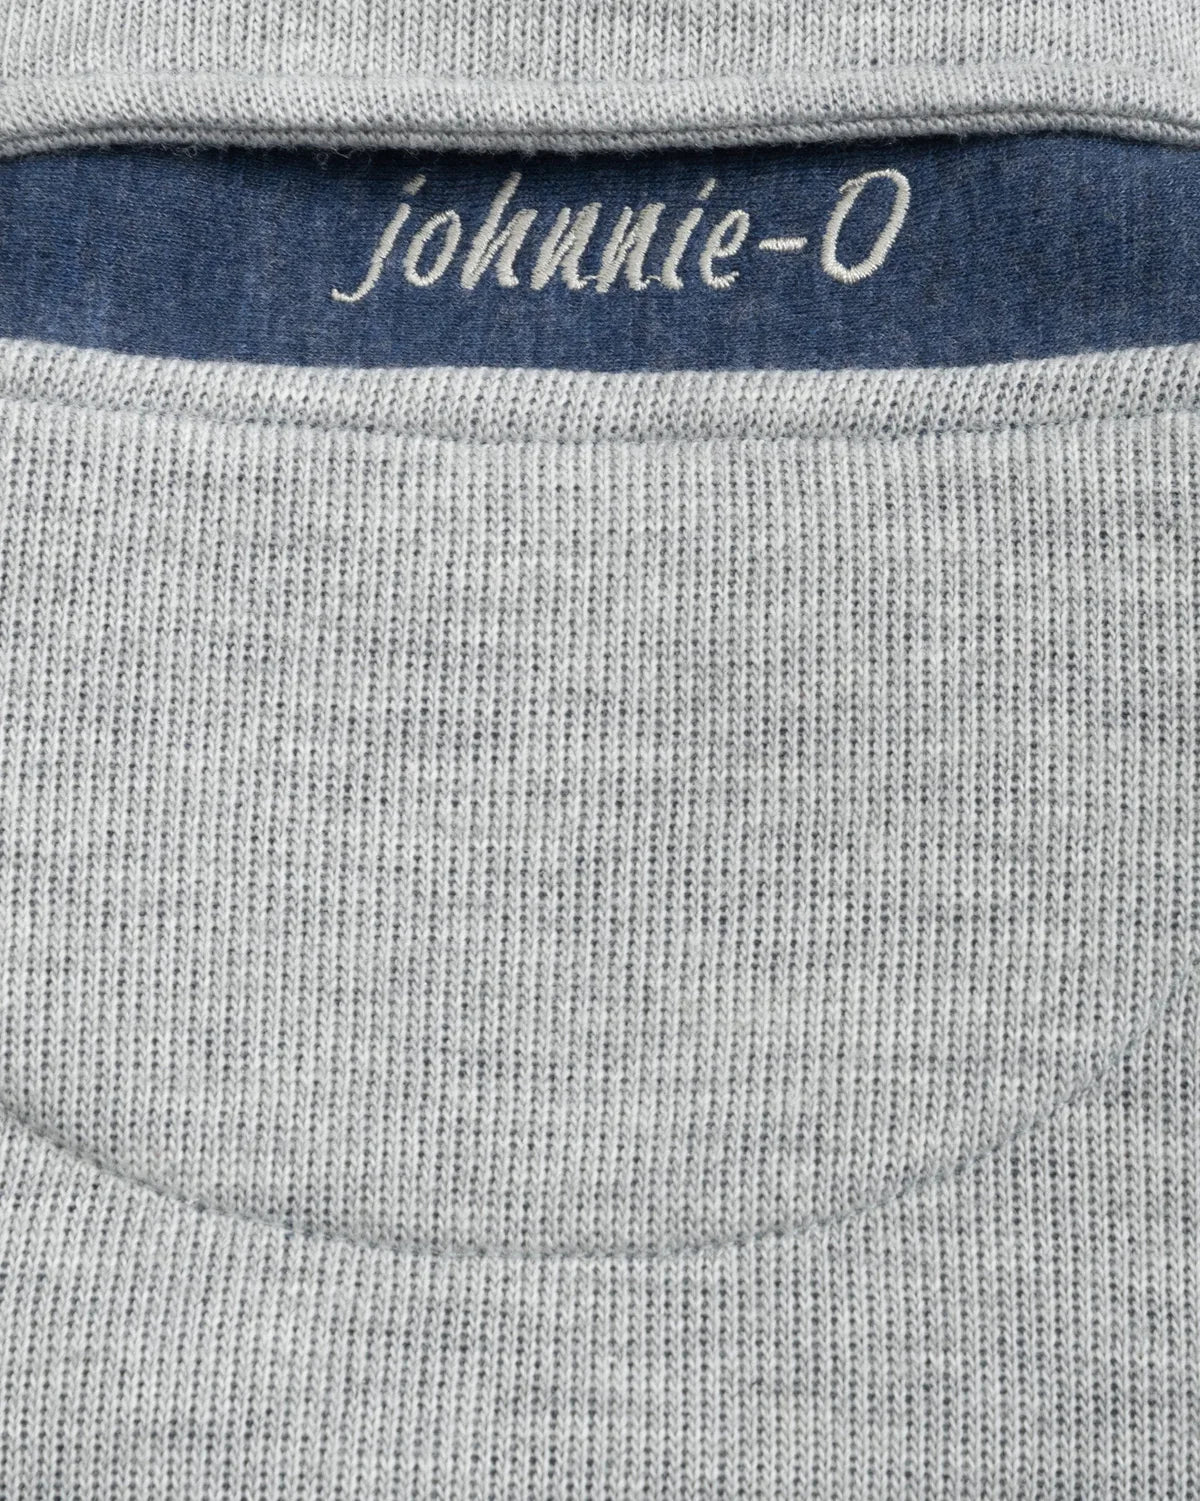 Johnnie-O Tudor Knit Sweater Jacket